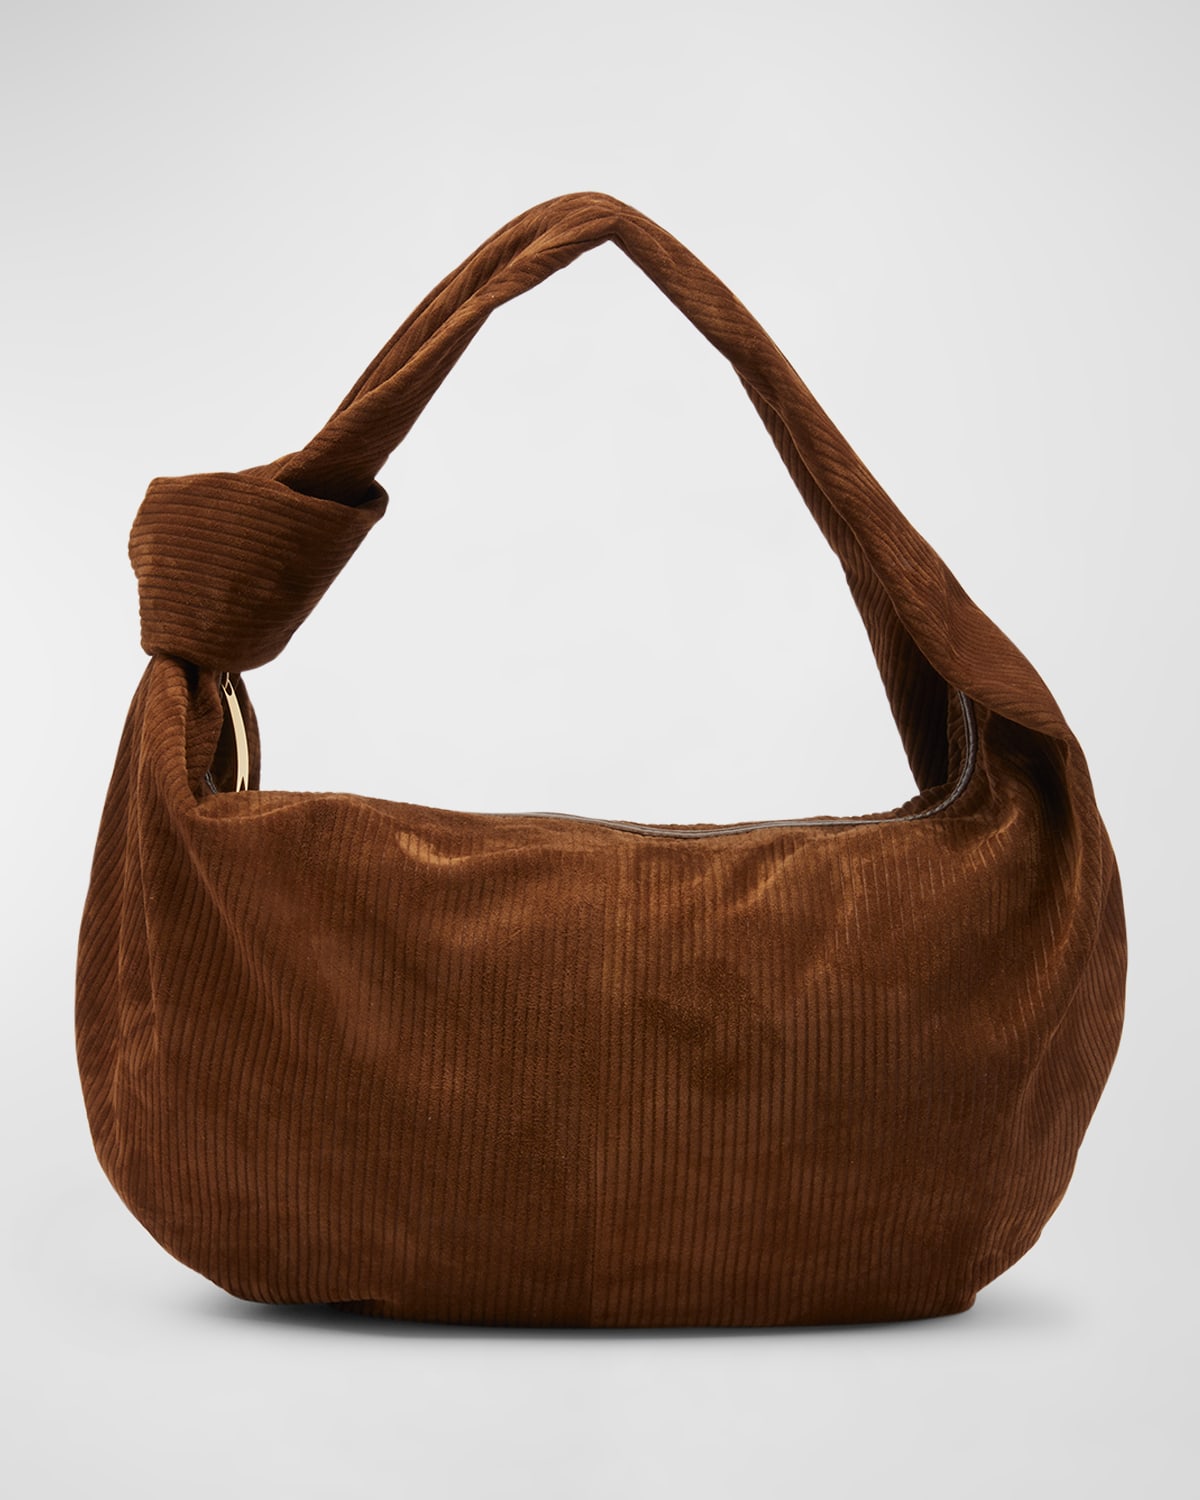 Designer Leather Handbags